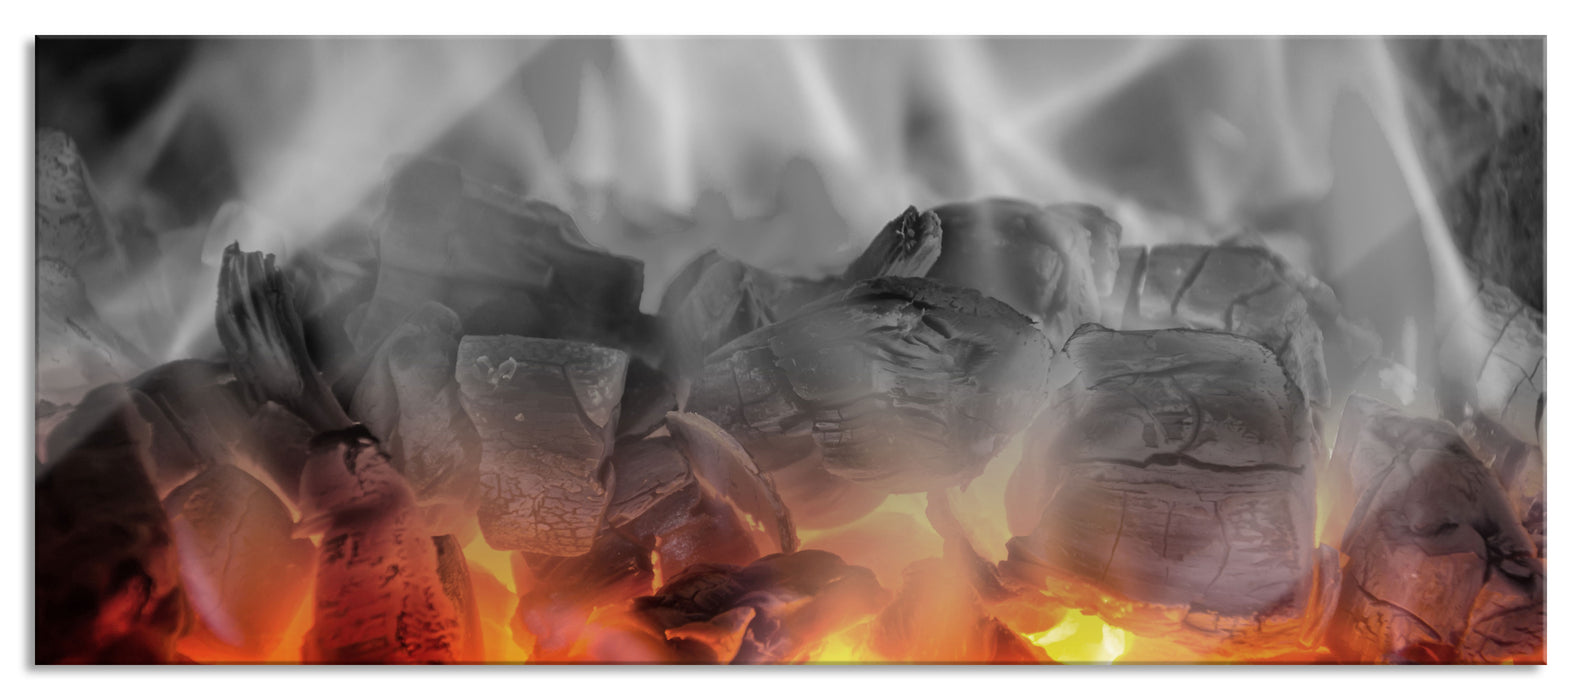 brennende Holzkohle in Kamin, Glasbild Panorama